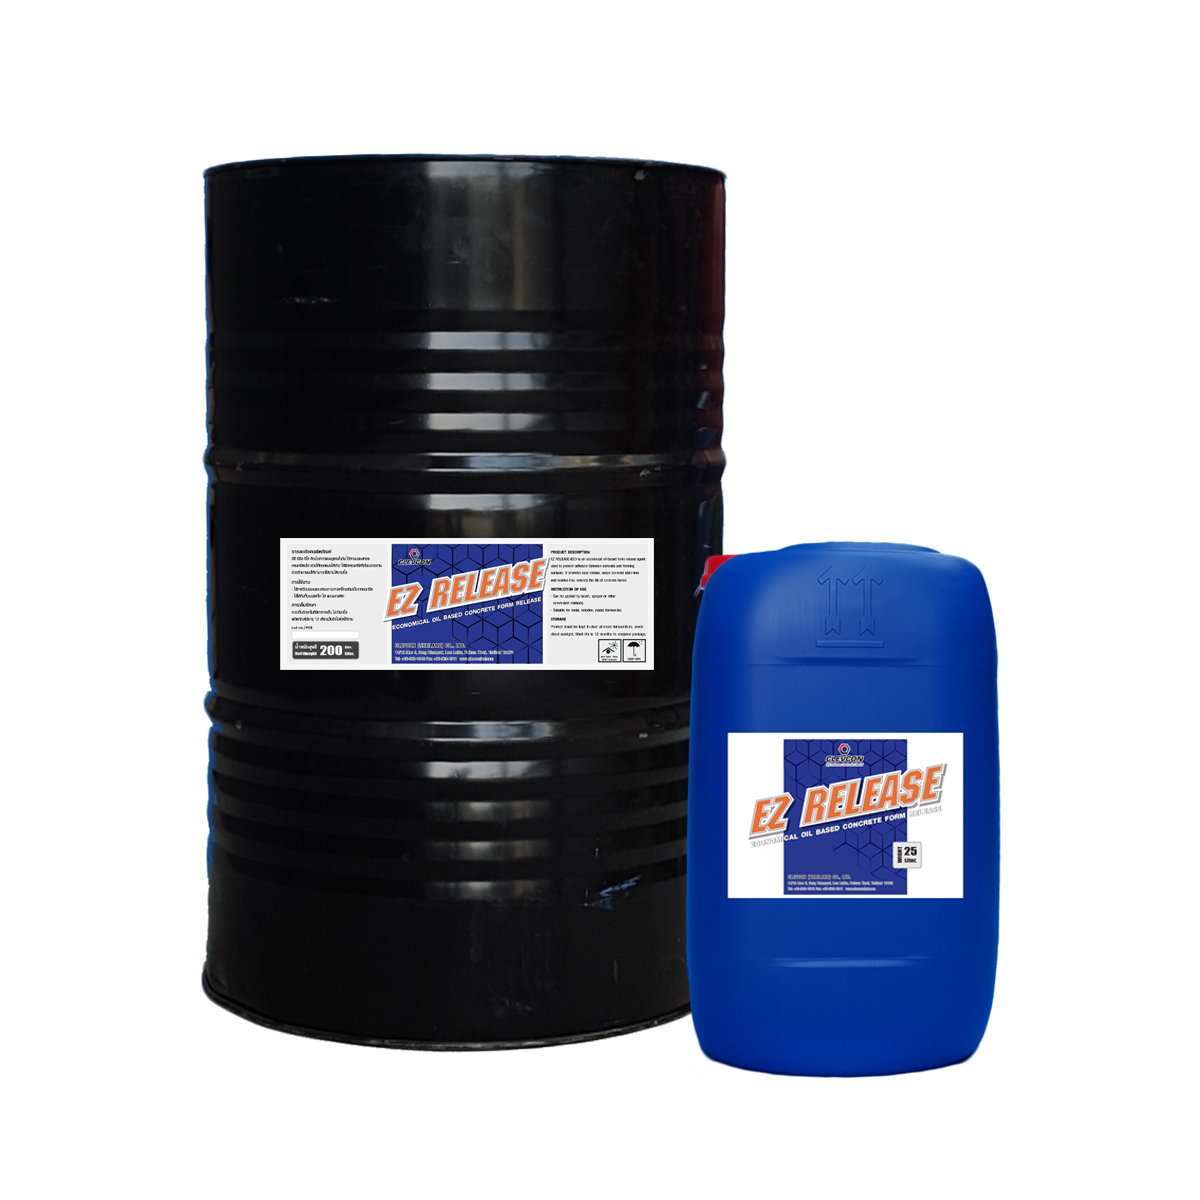 EZ RELEASE Oil Based Concrete Form Release Agent น้ำยาทาแบบสูตรน้ำมัน